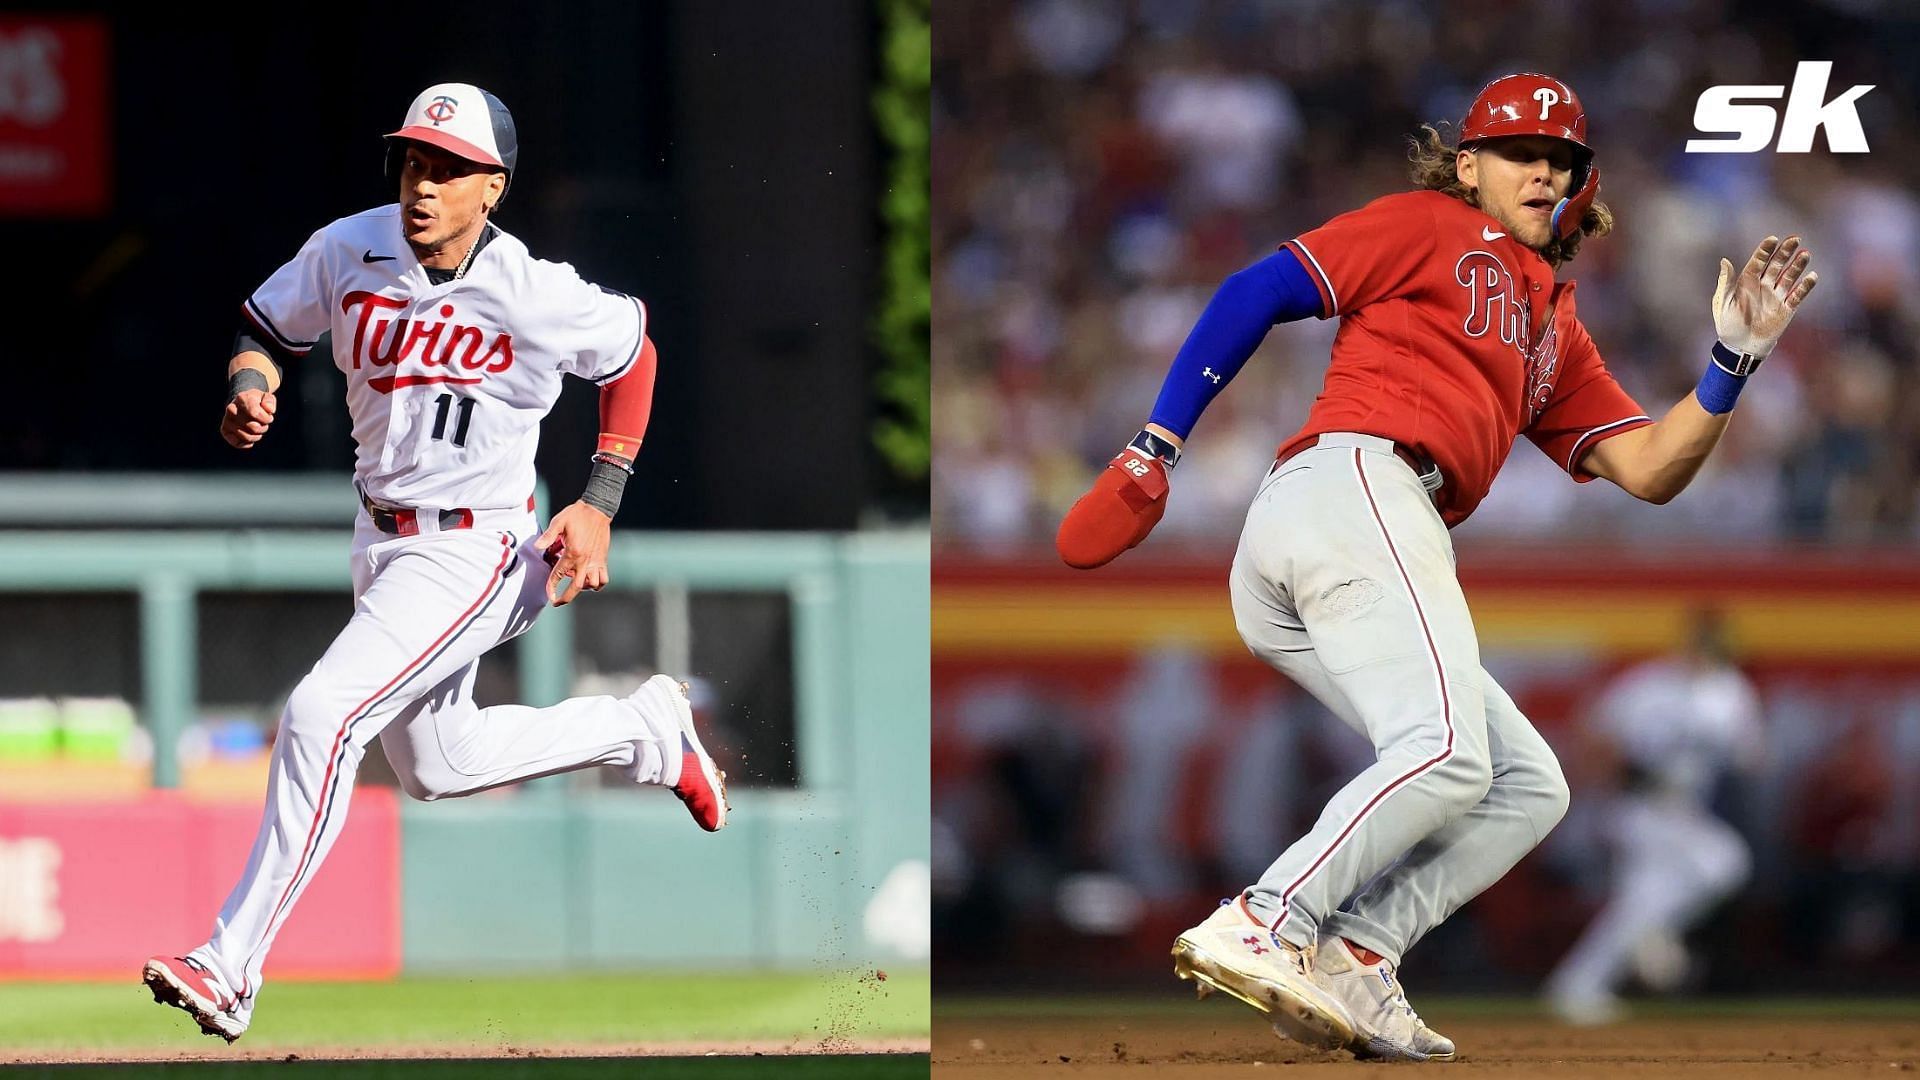 Alec Bohm and Jorge Polanco may be late-round gems at third base in MLB fantasy drafts this year